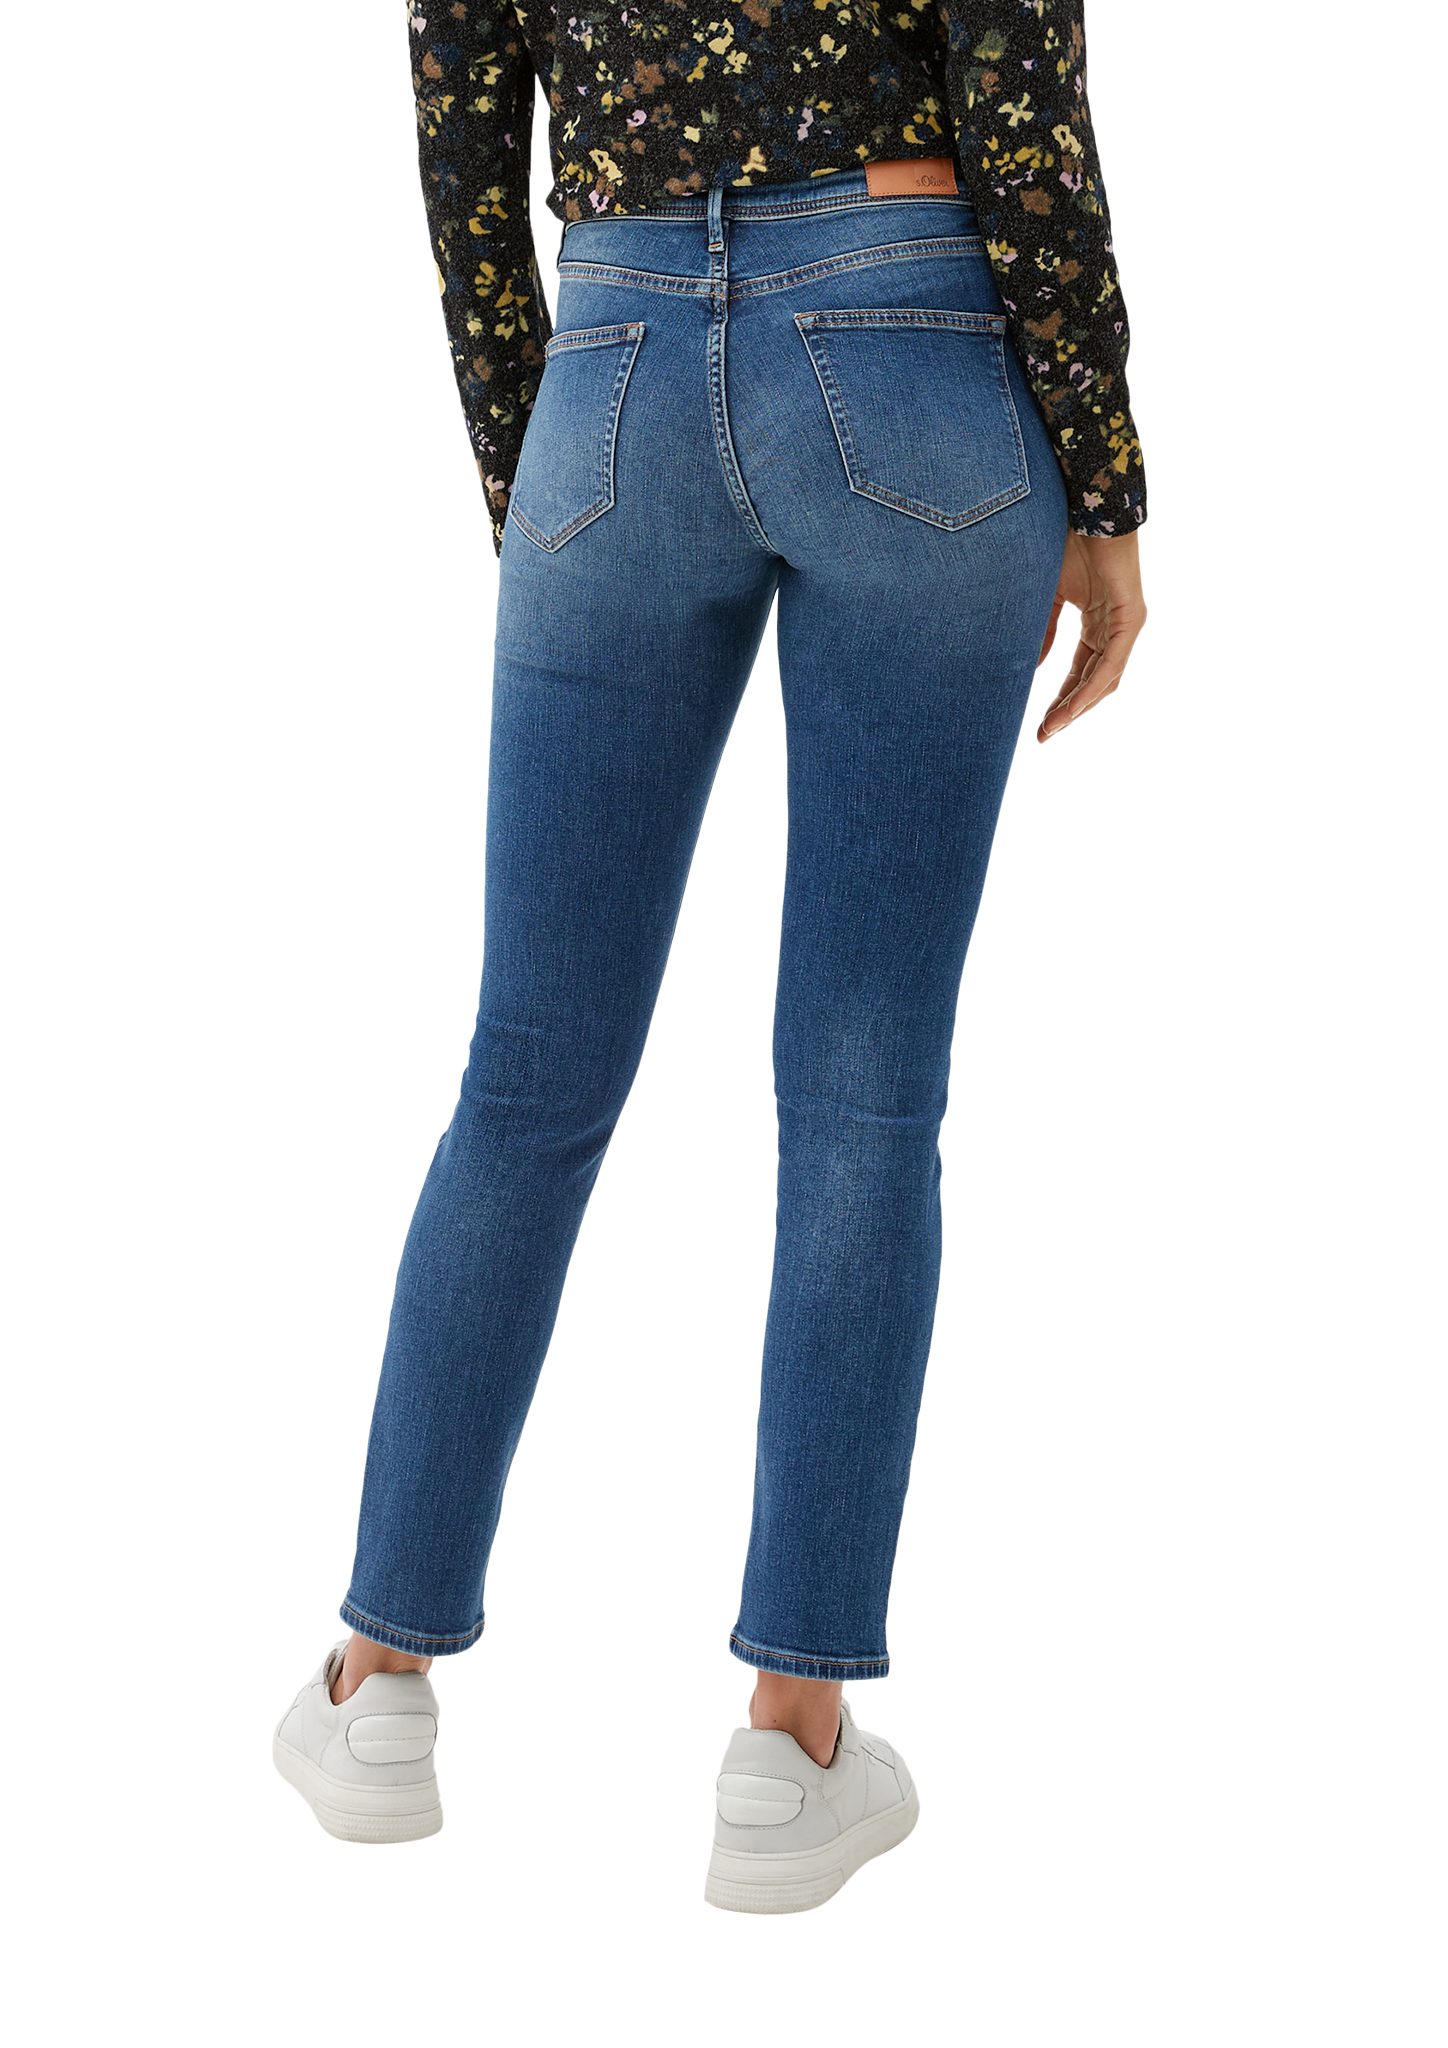 Betsy / himmelblau Slim 5-Pocket-Jeans s.Oliver Rise Mid Leg Fit Slim Jeans / Waschung /